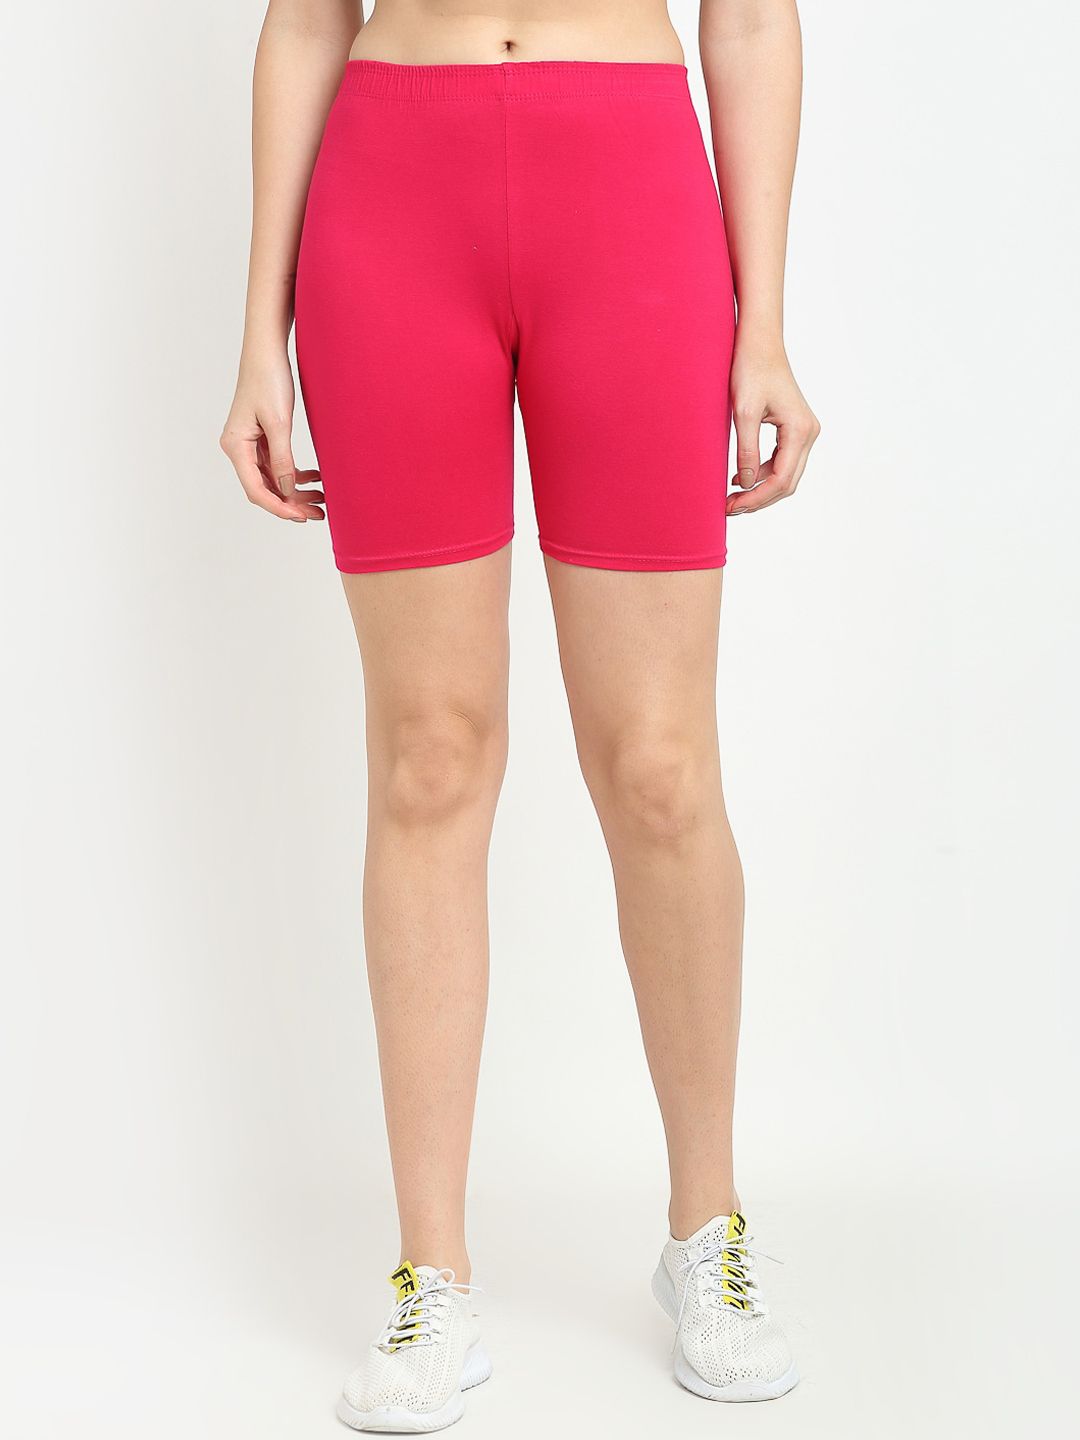 GRACIT Women Pink Biker Shorts Price in India